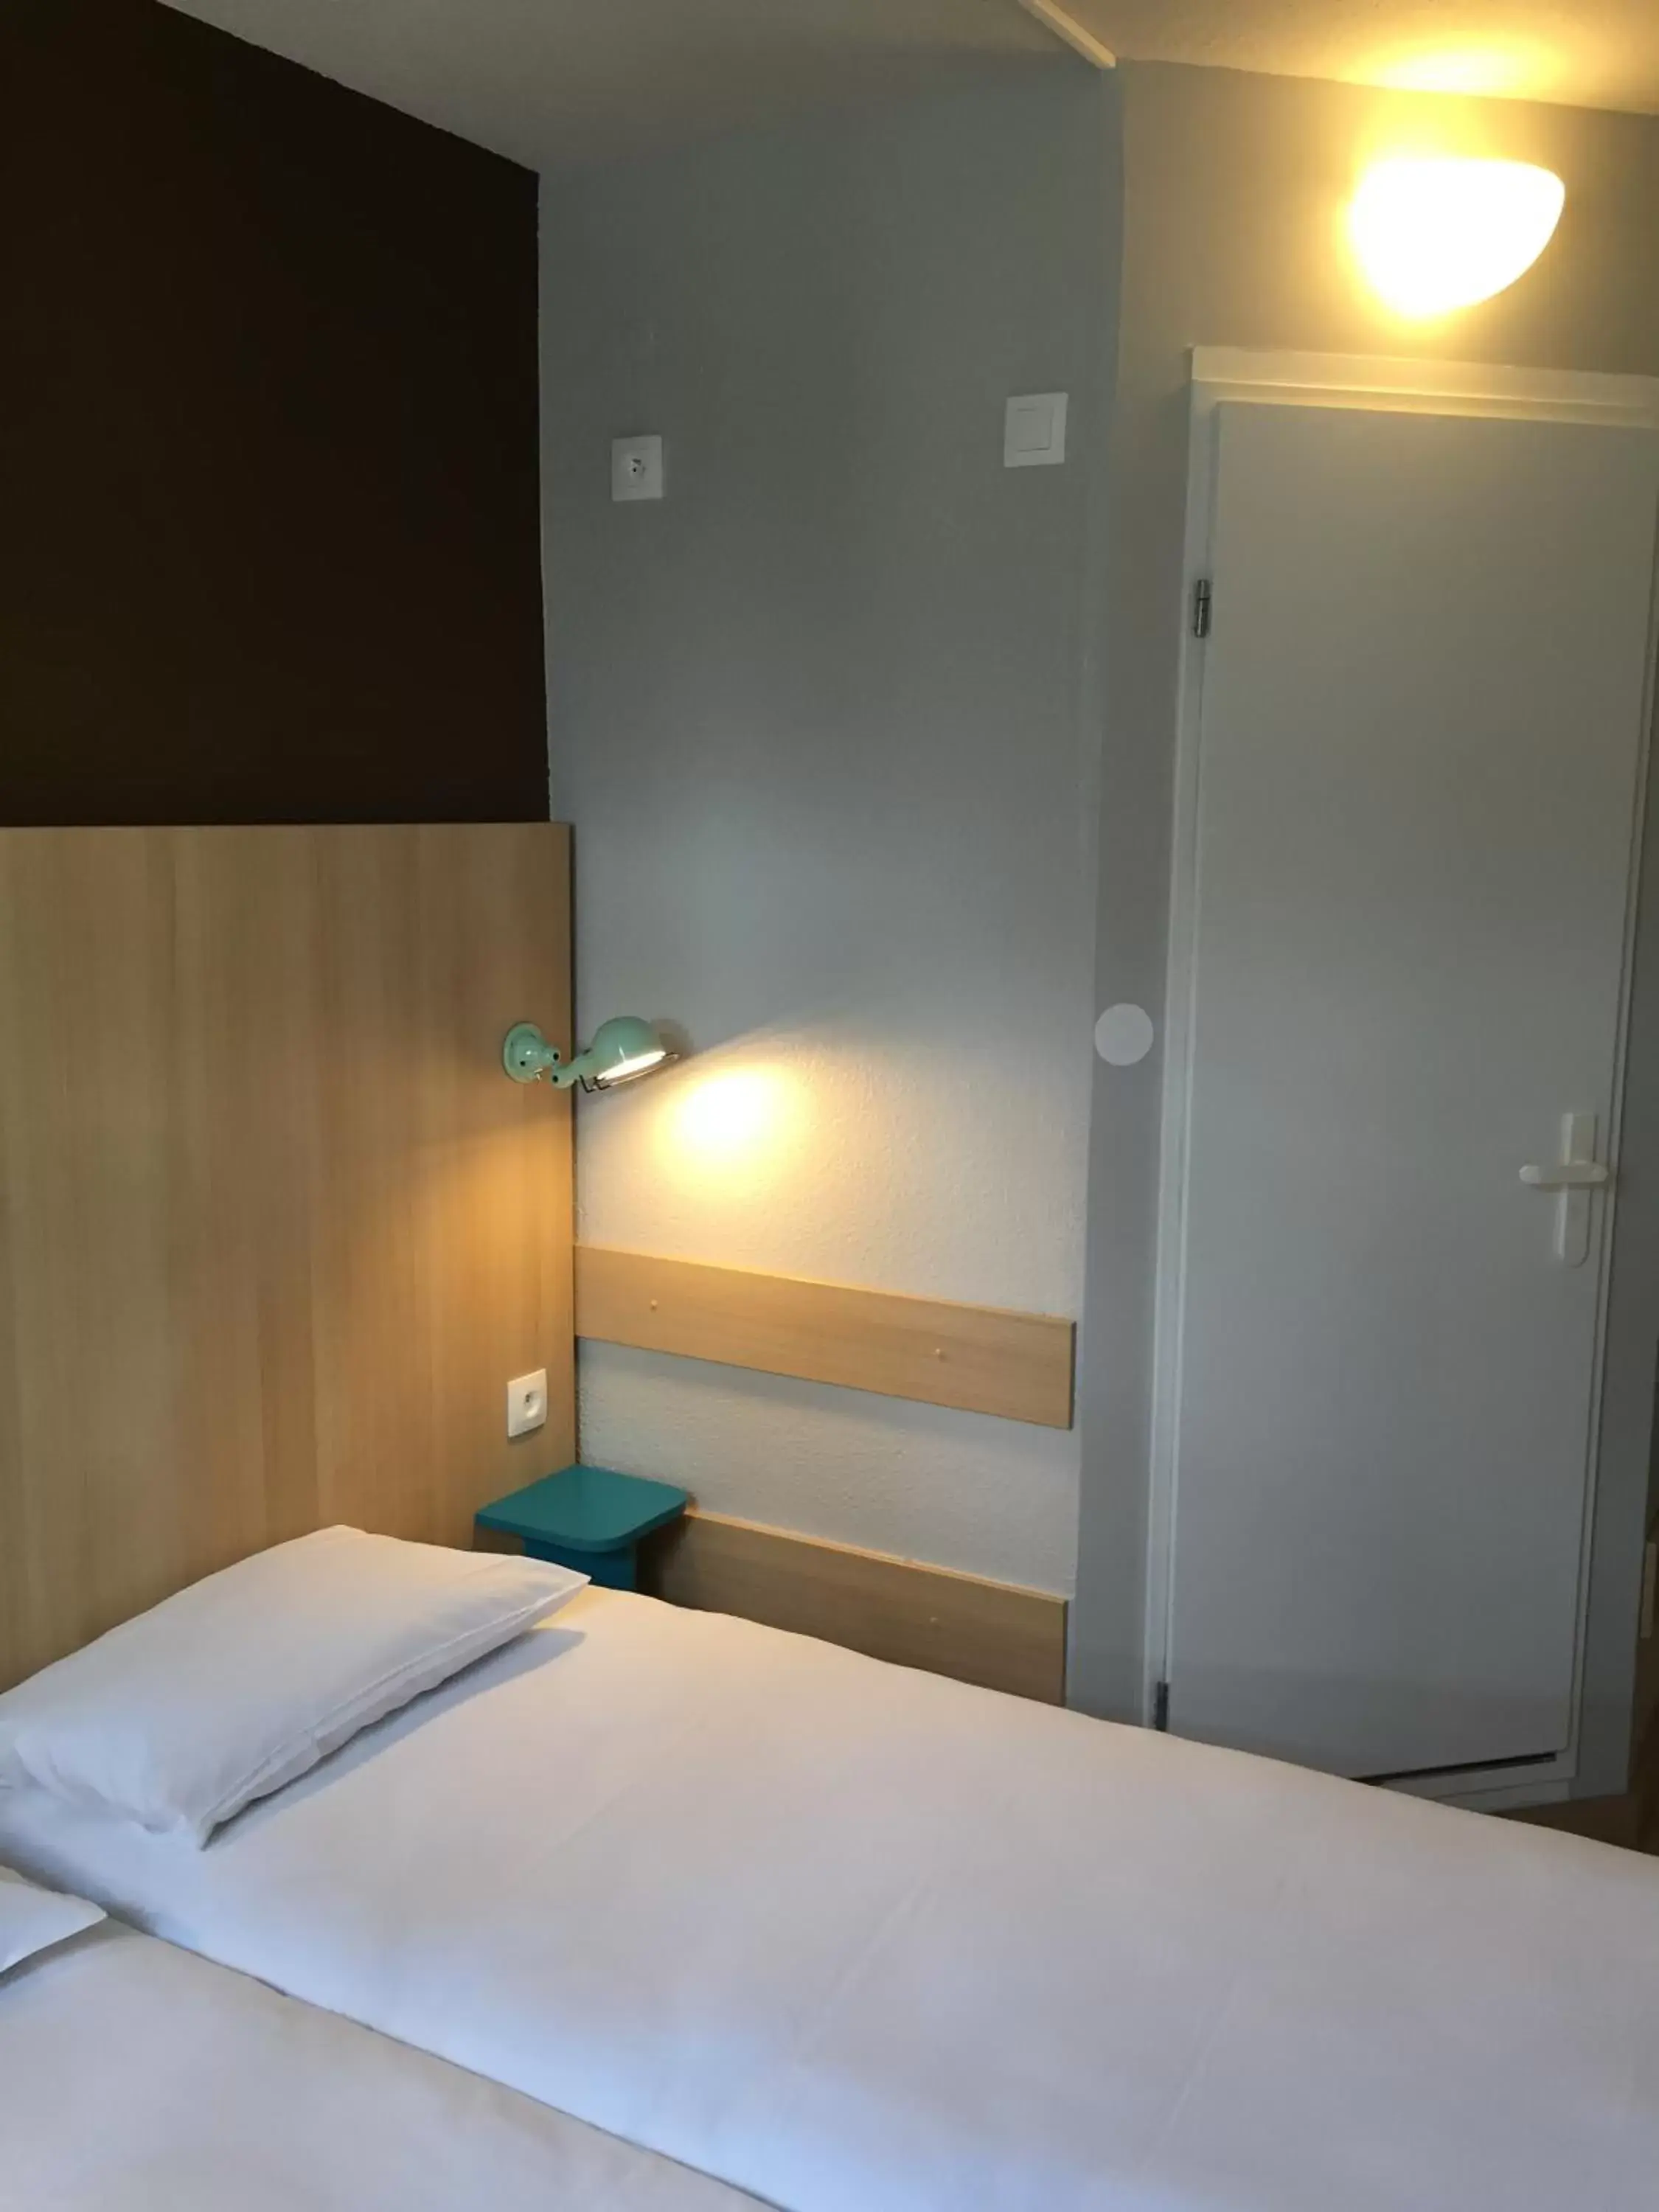 Shower, Room Photo in Hotel Reseda